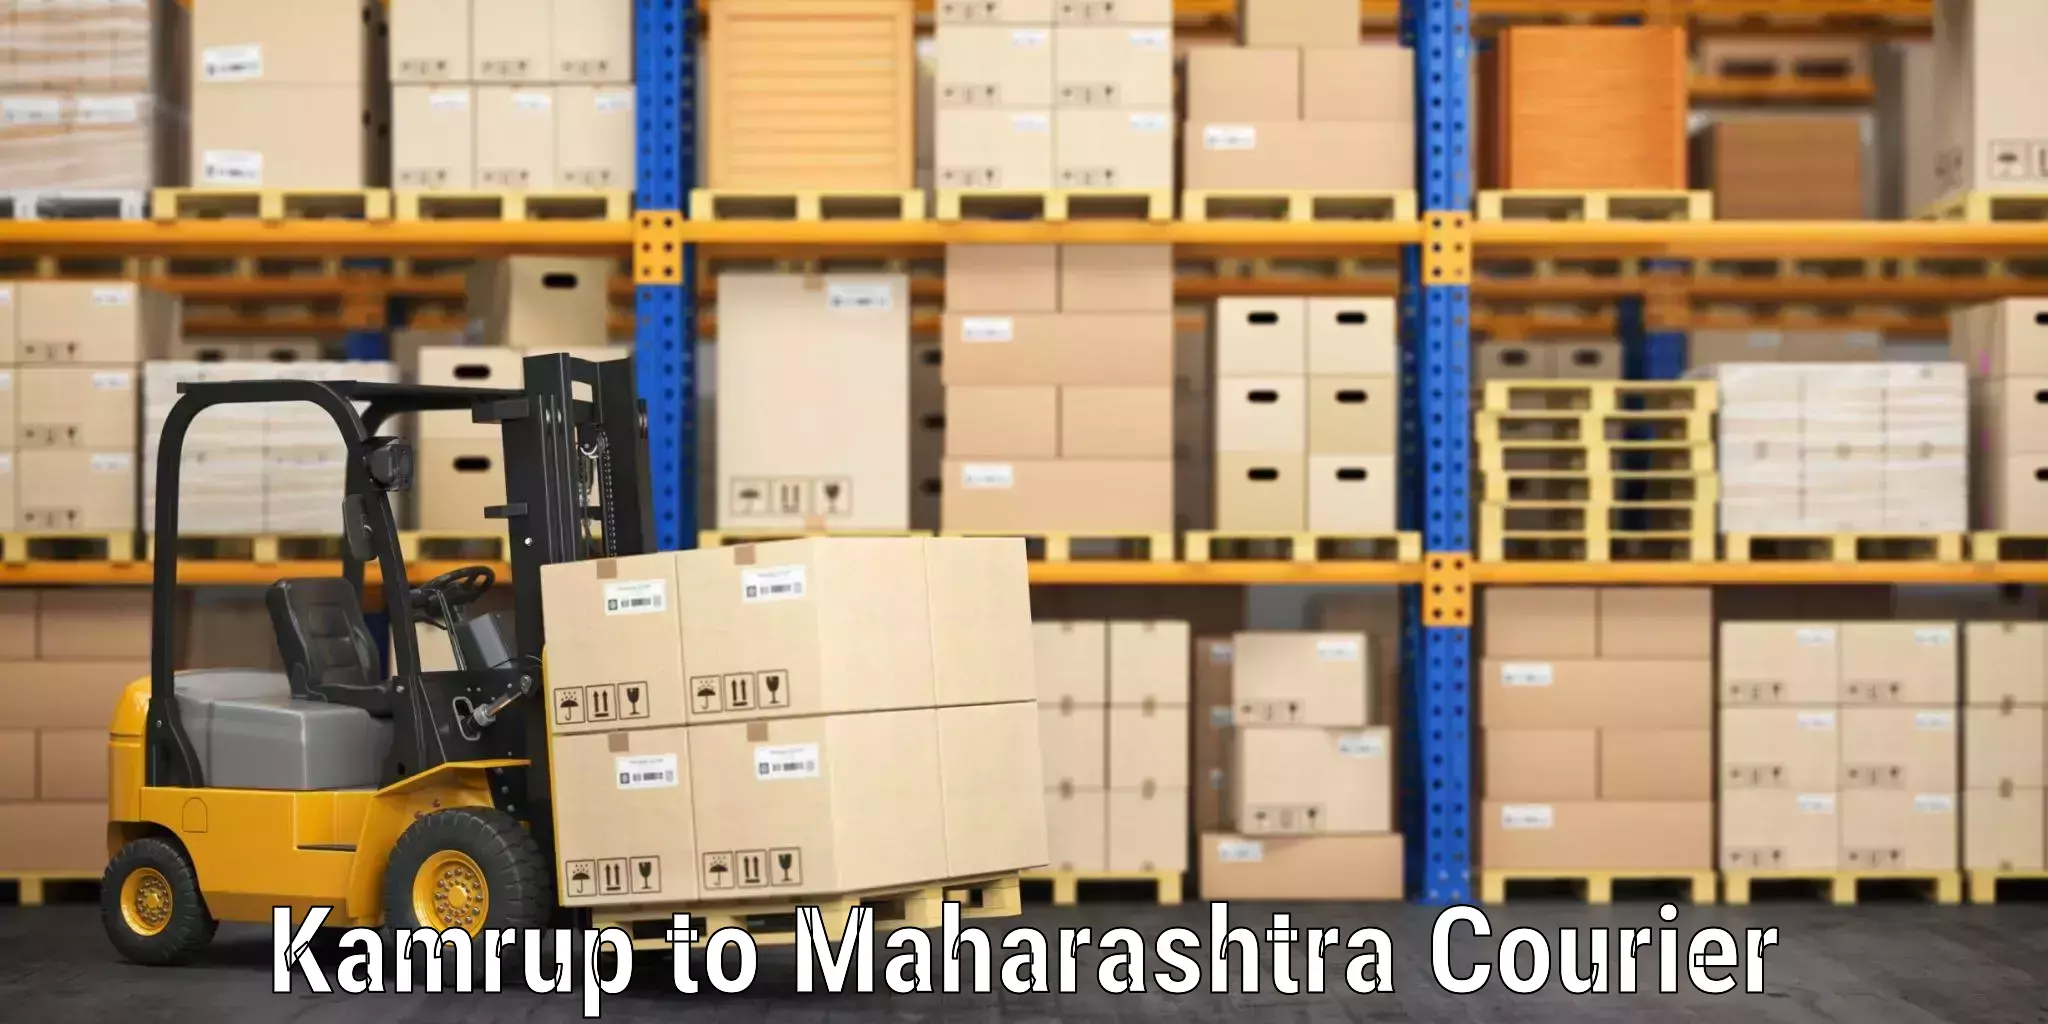 Luggage transport company Kamrup to Maharashtra